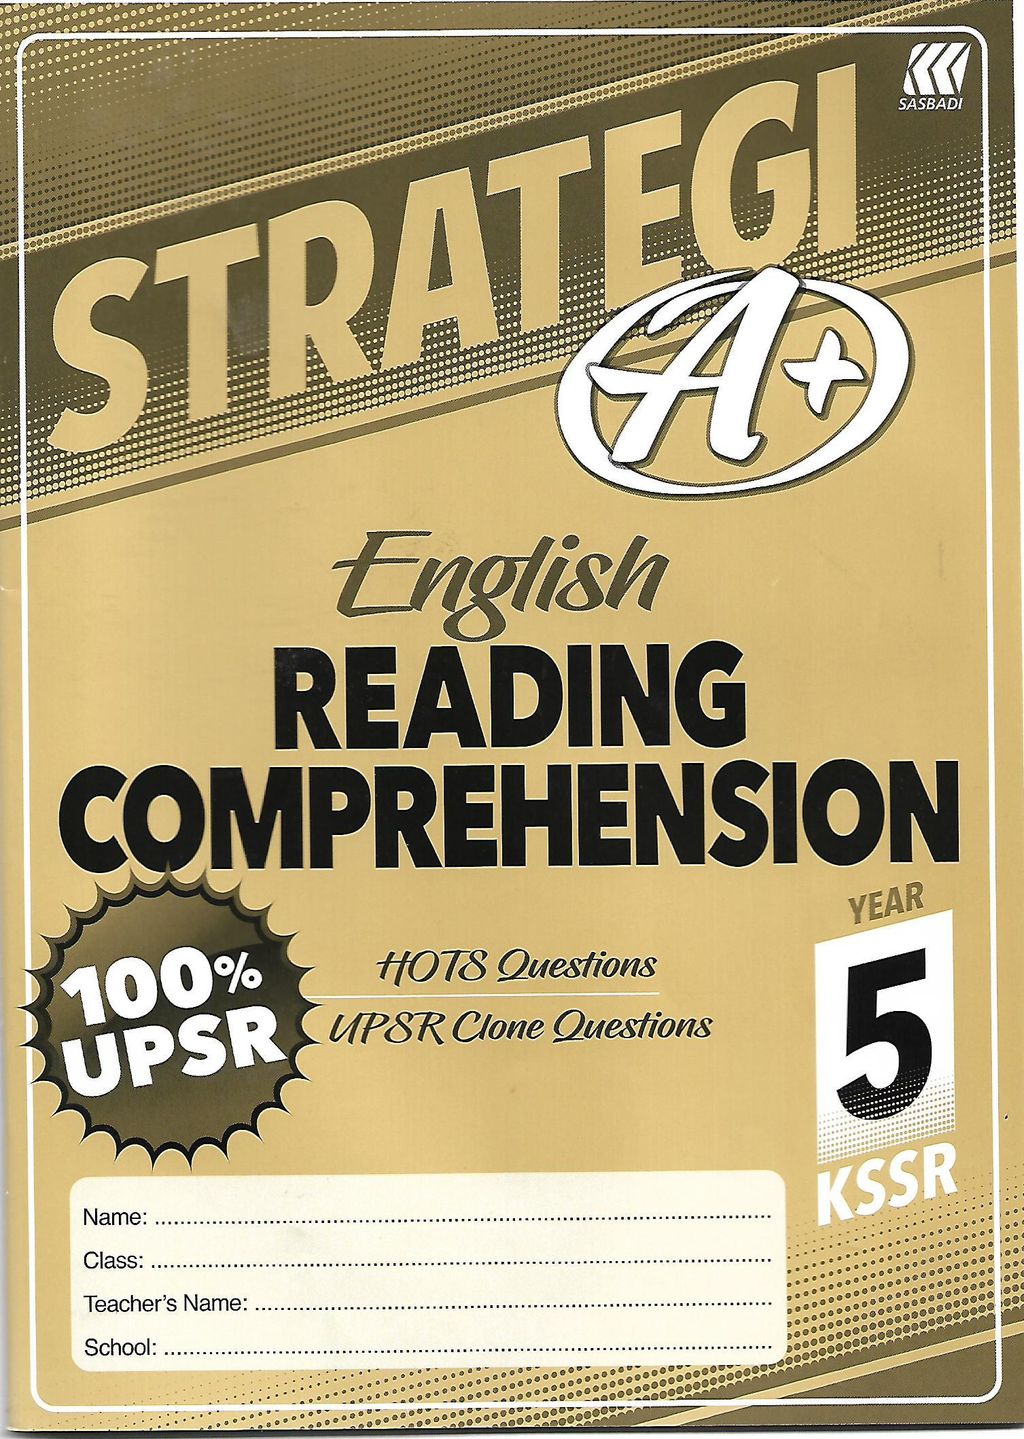 12157 ENGLISH READING COMPREHENSION.jpg